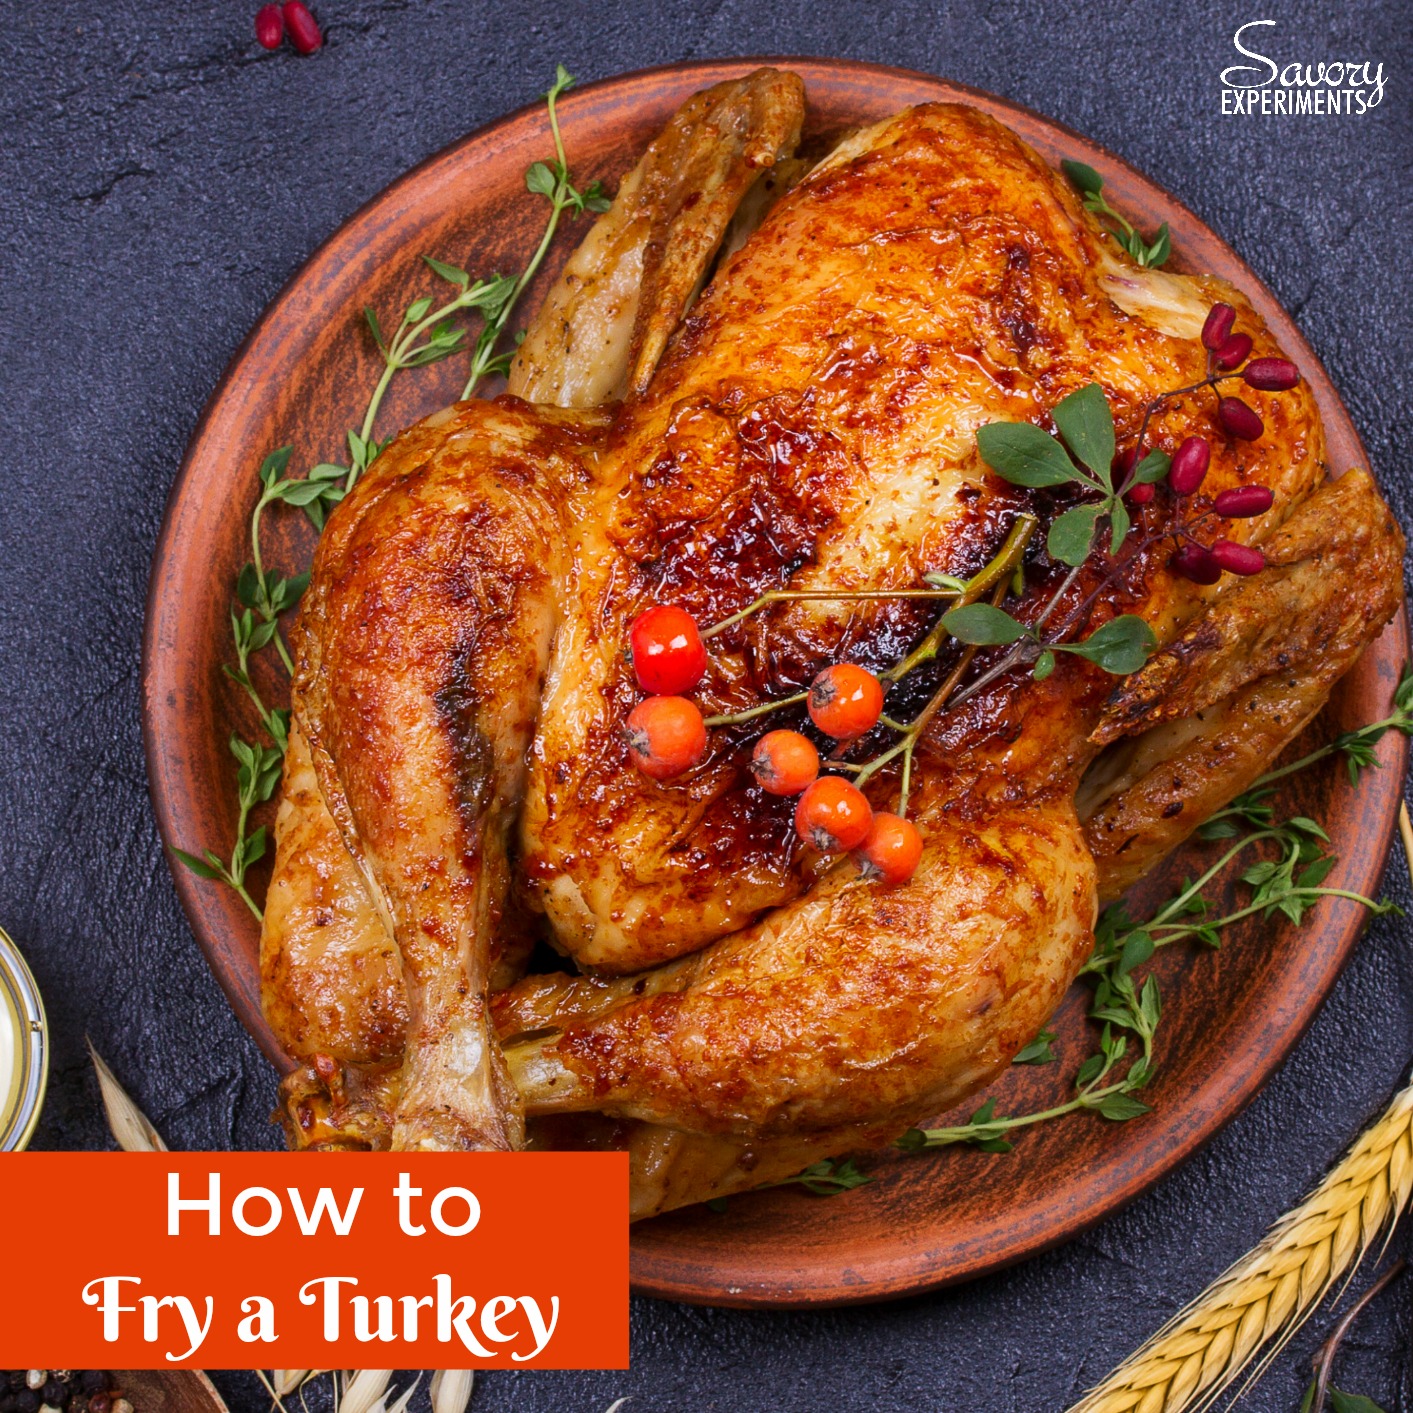 How to Fry a Turkey - Fried Turkey Recipe - Savory Experiments